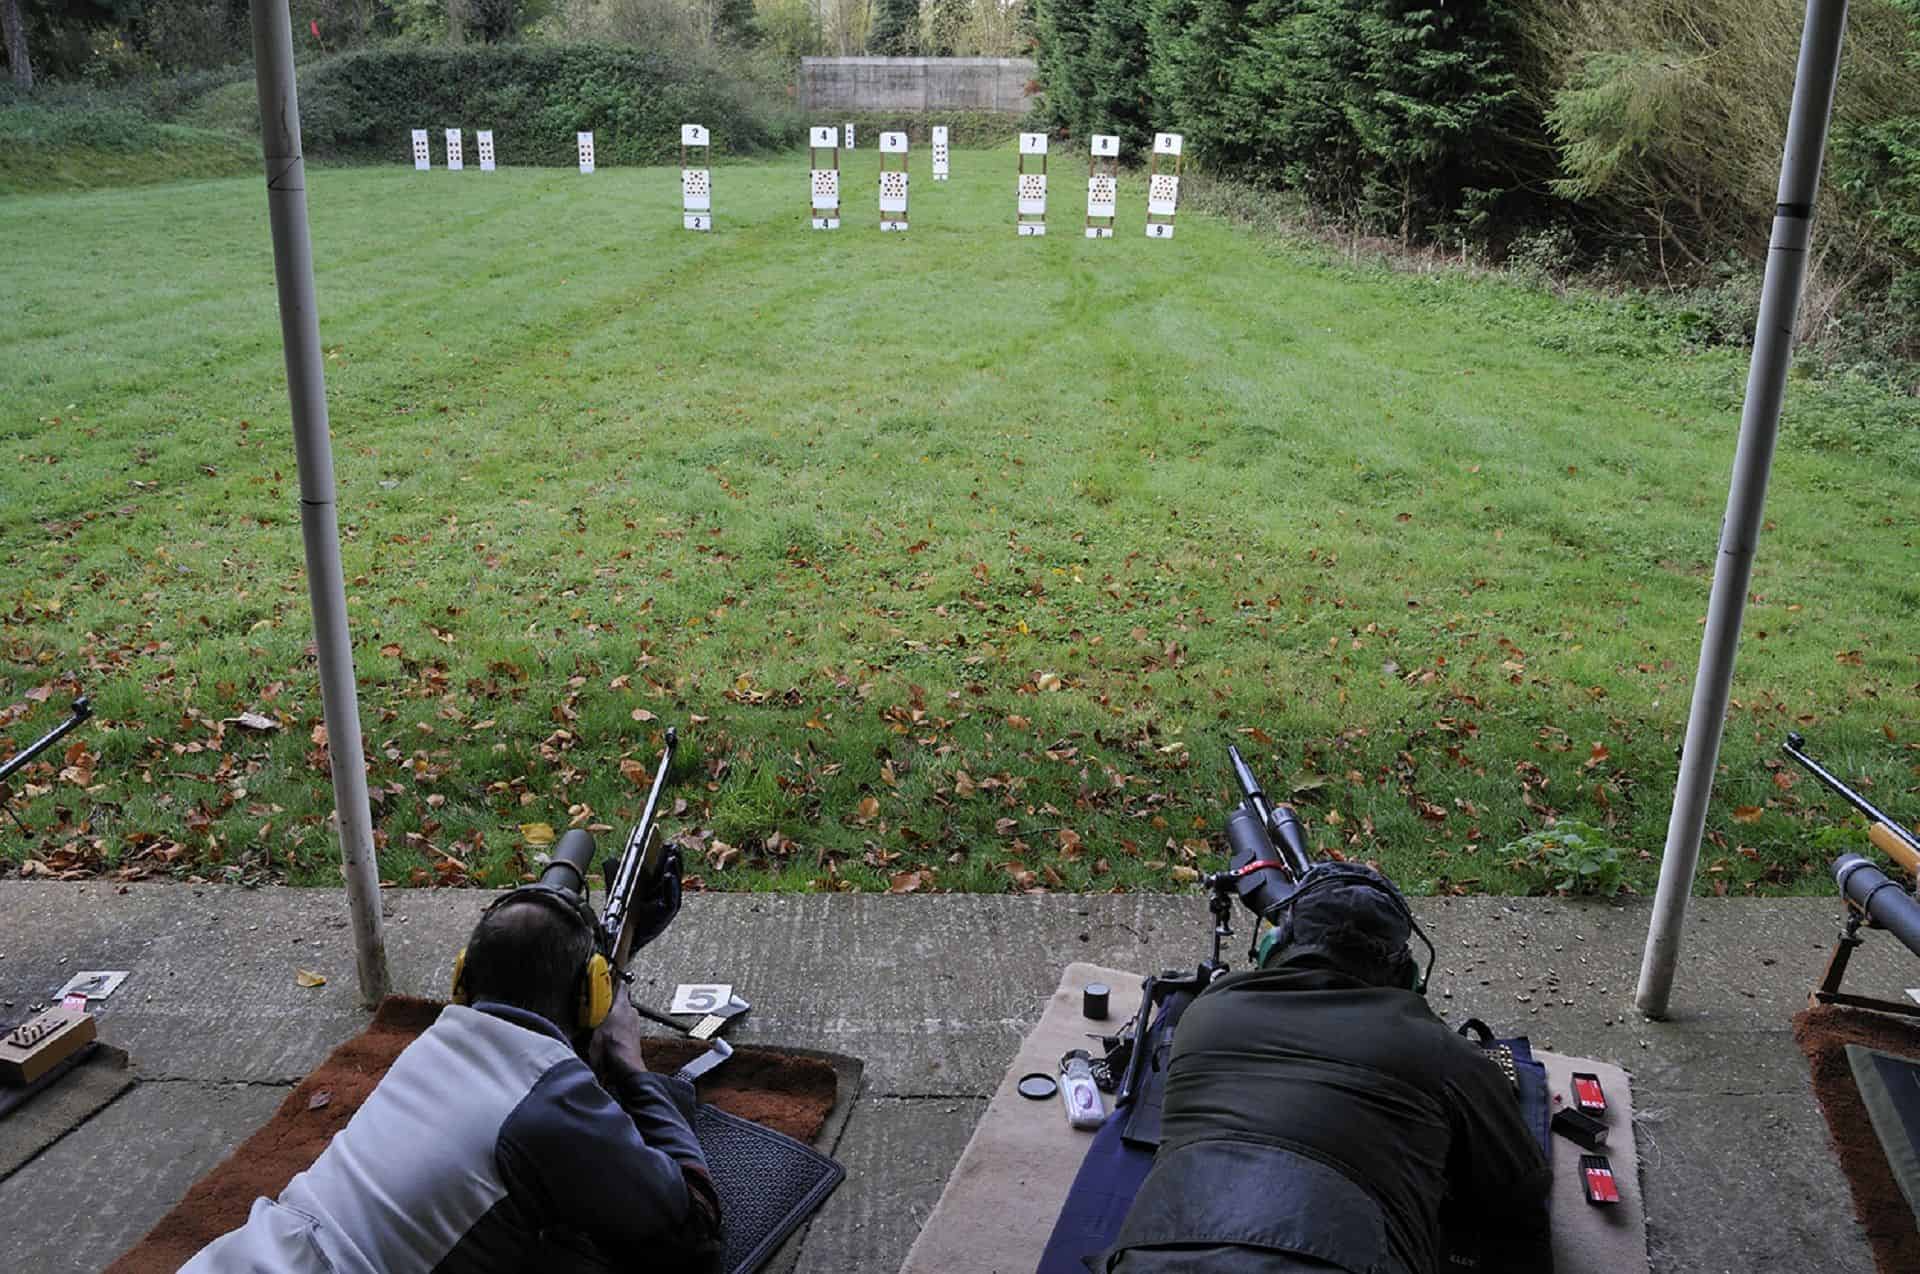 Farncombe & Godalming Rifle Club in UK